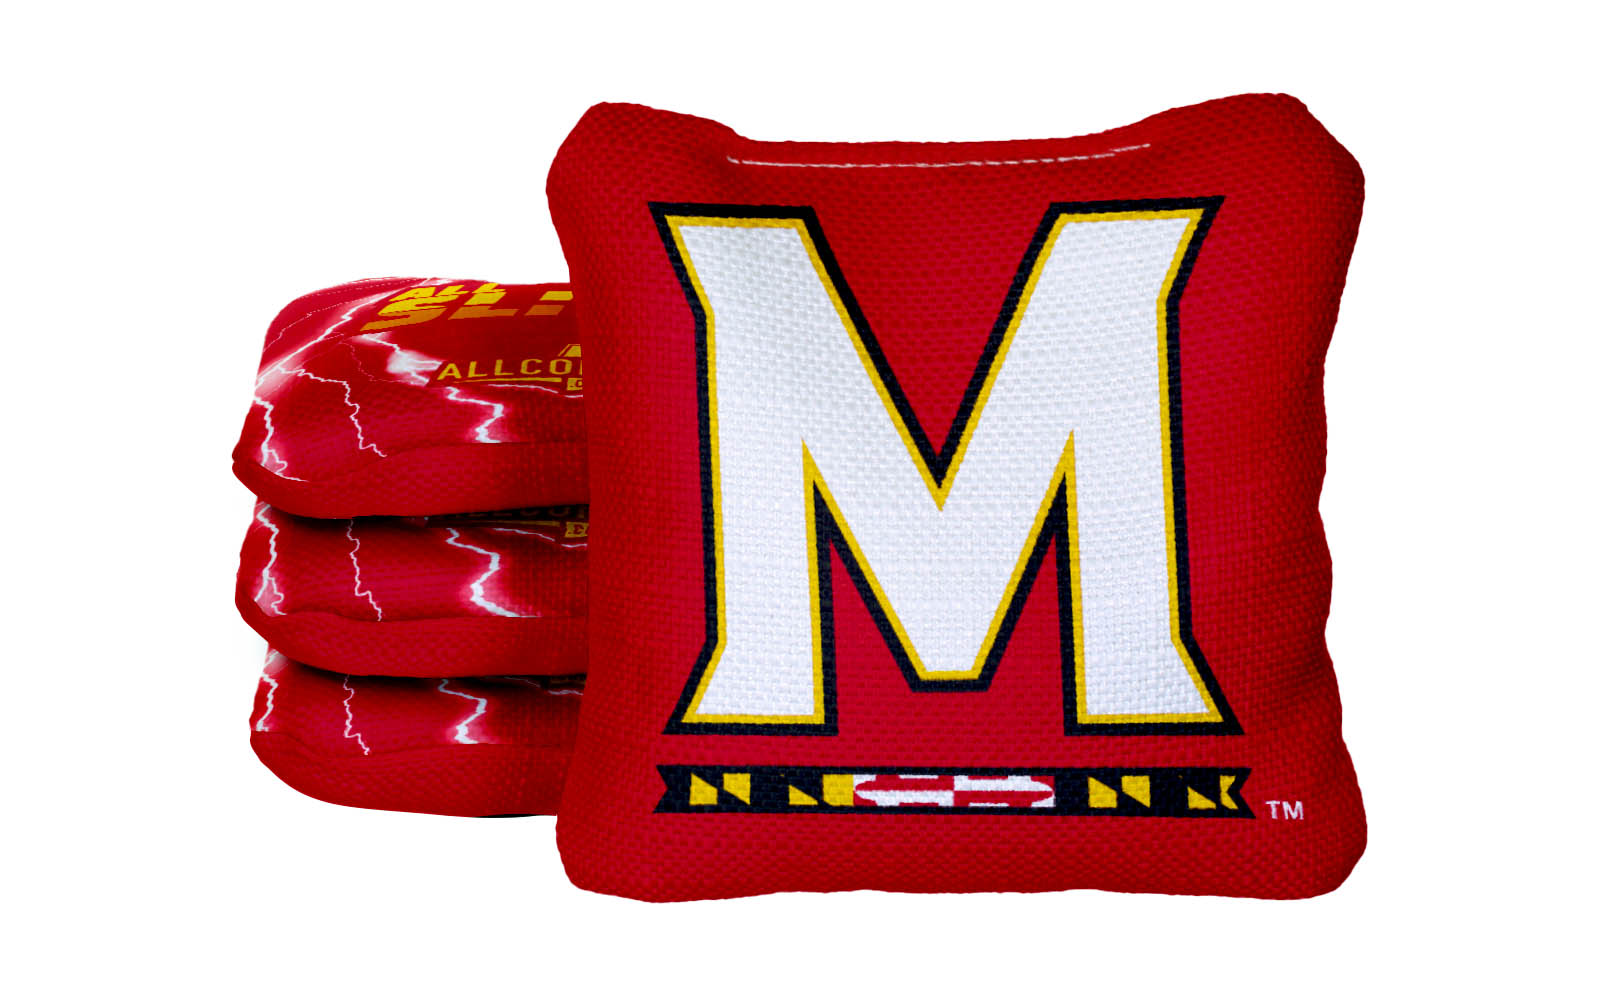 Officially Licensed Collegiate Cornhole Bags - AllCornhole All-Slide 2.0 - Set of 4 - University of Maryland